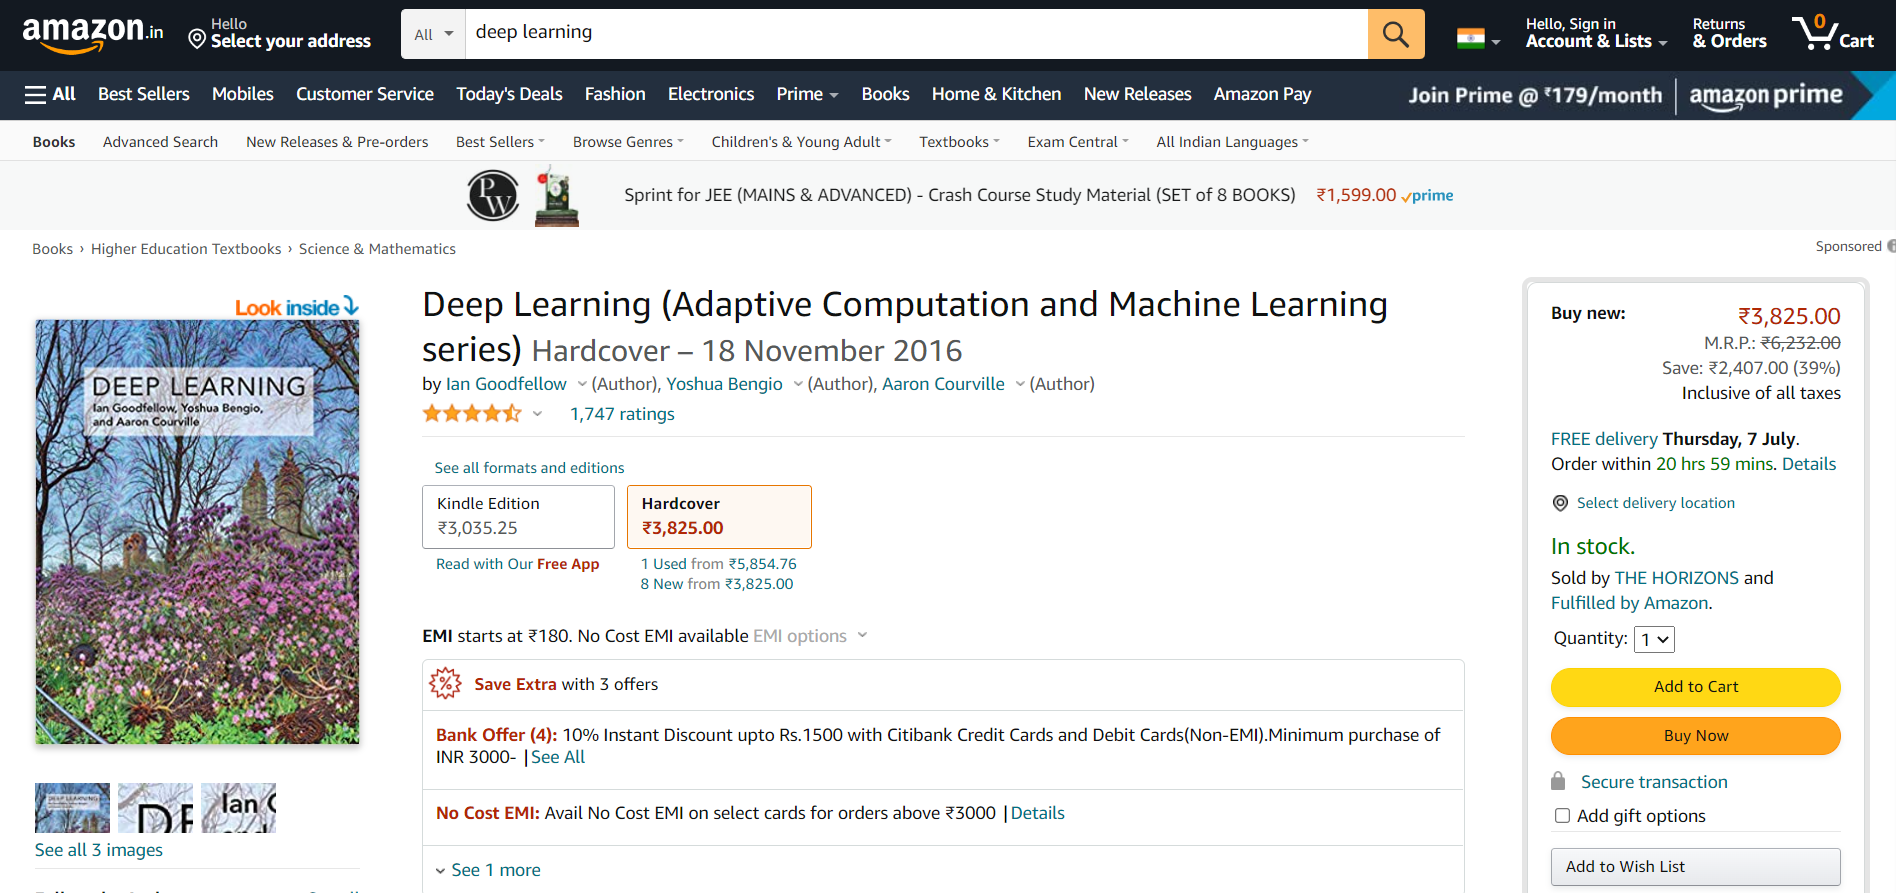 Deep Learning Adaptive Computation And Machine Leaning Series